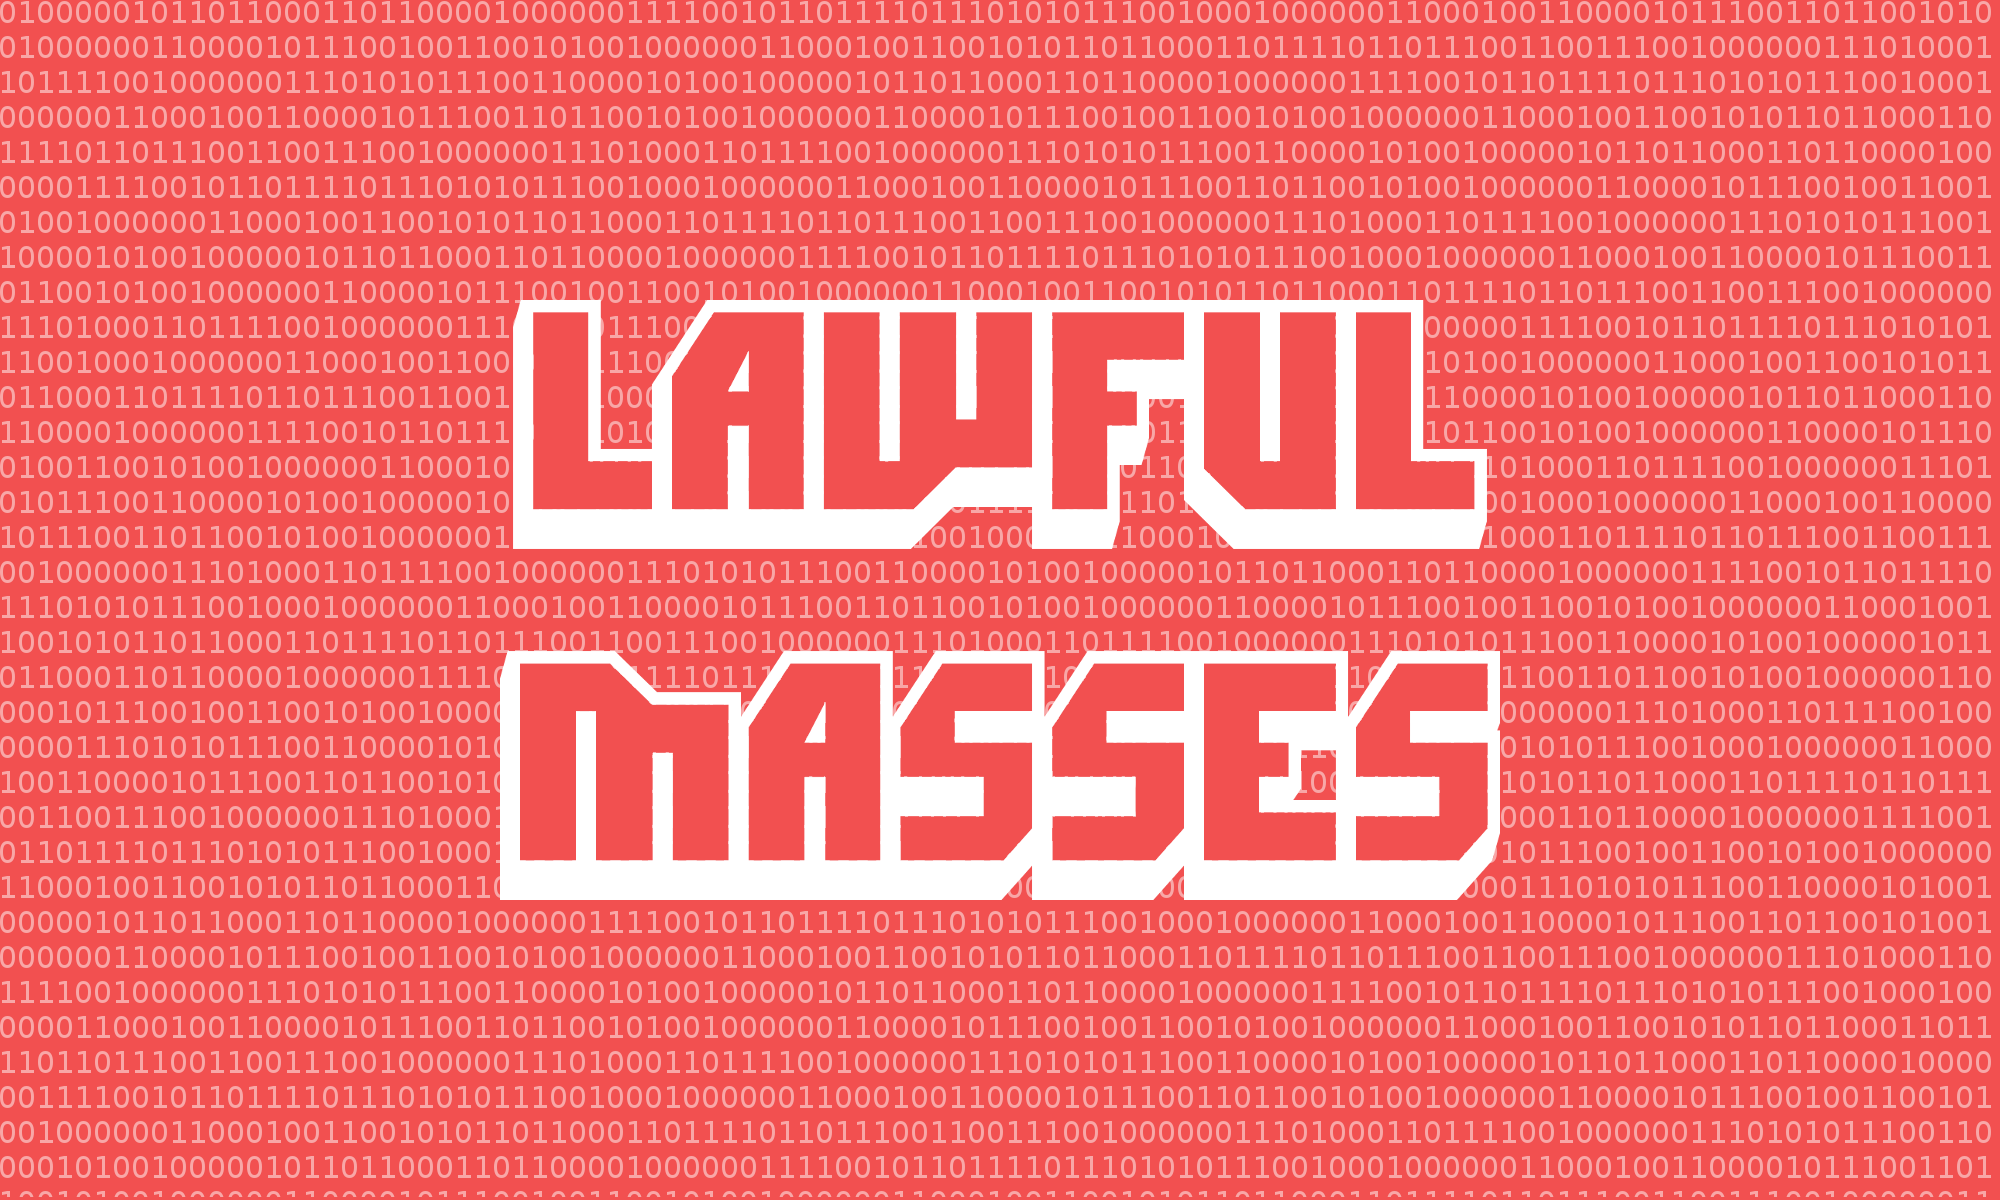 Lawful Masses